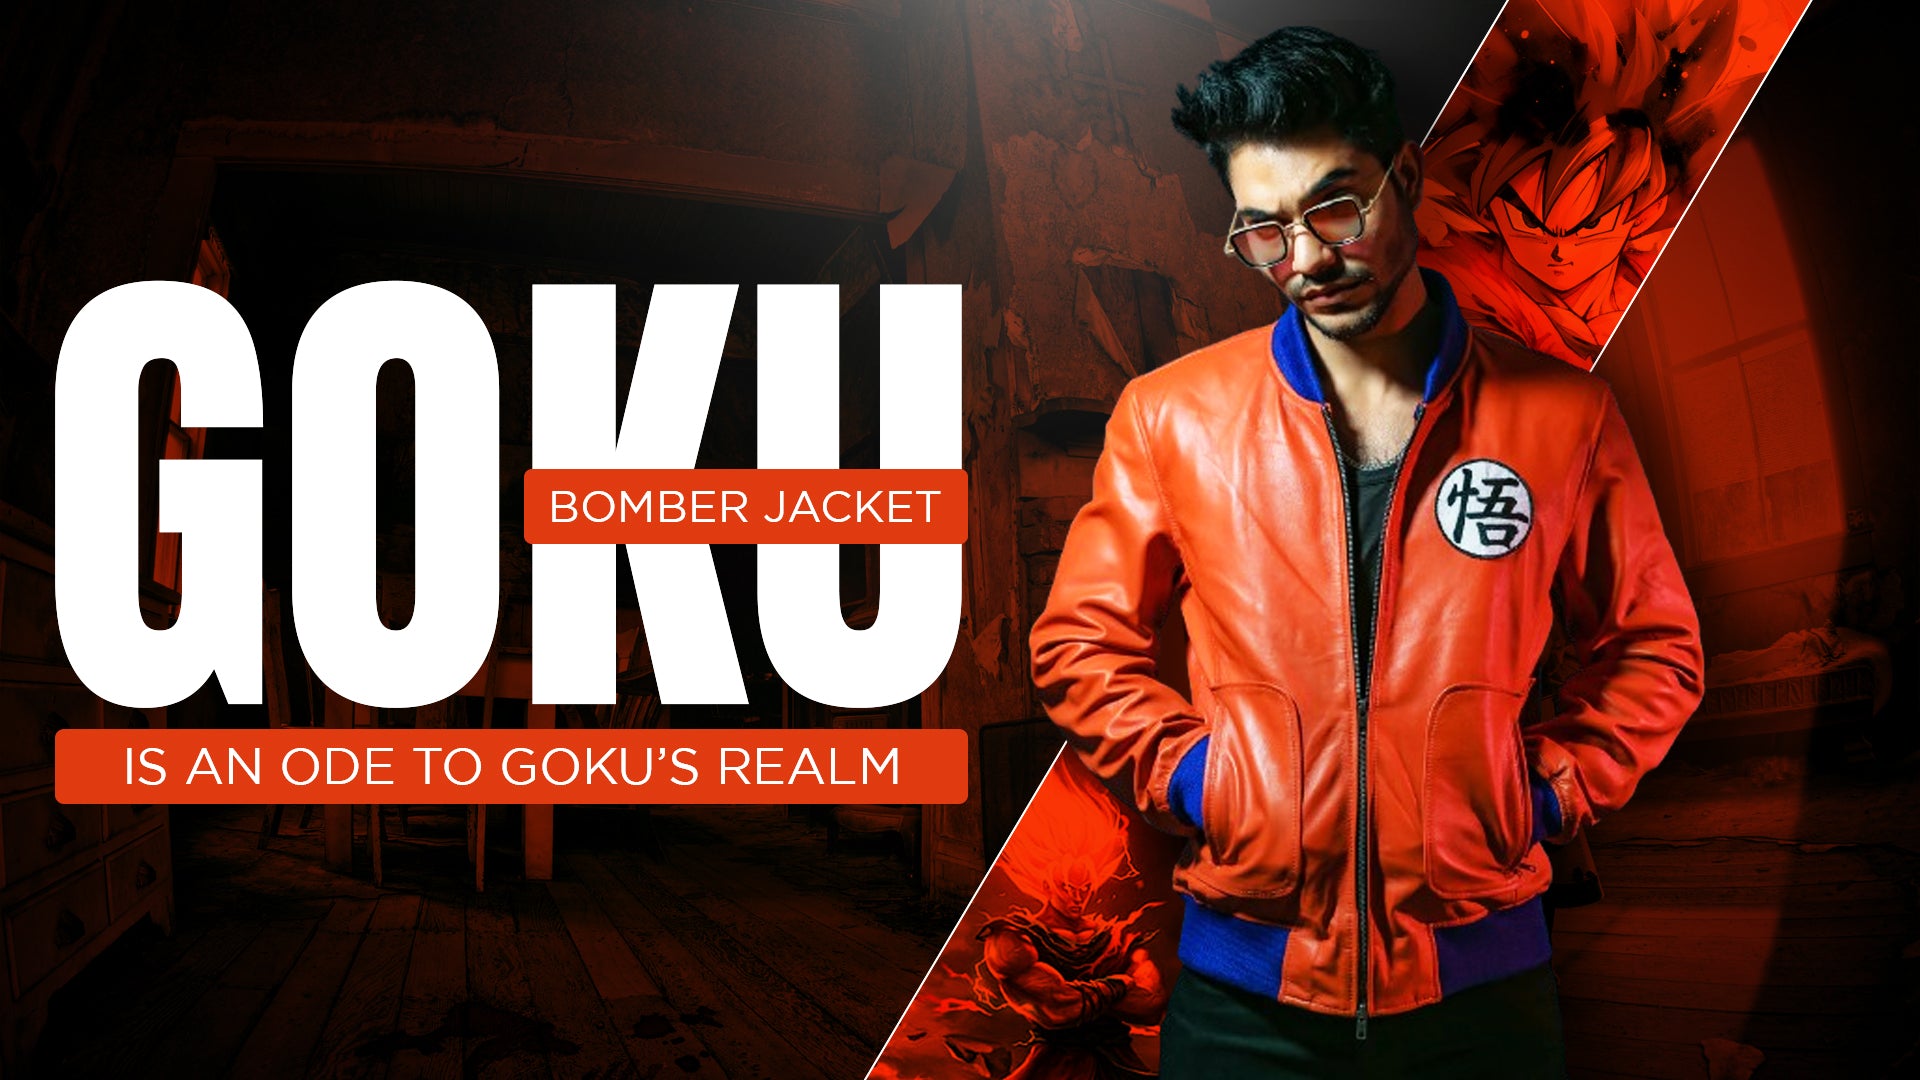 Goku Bomber Jacket is an Ode to Goku's Realm